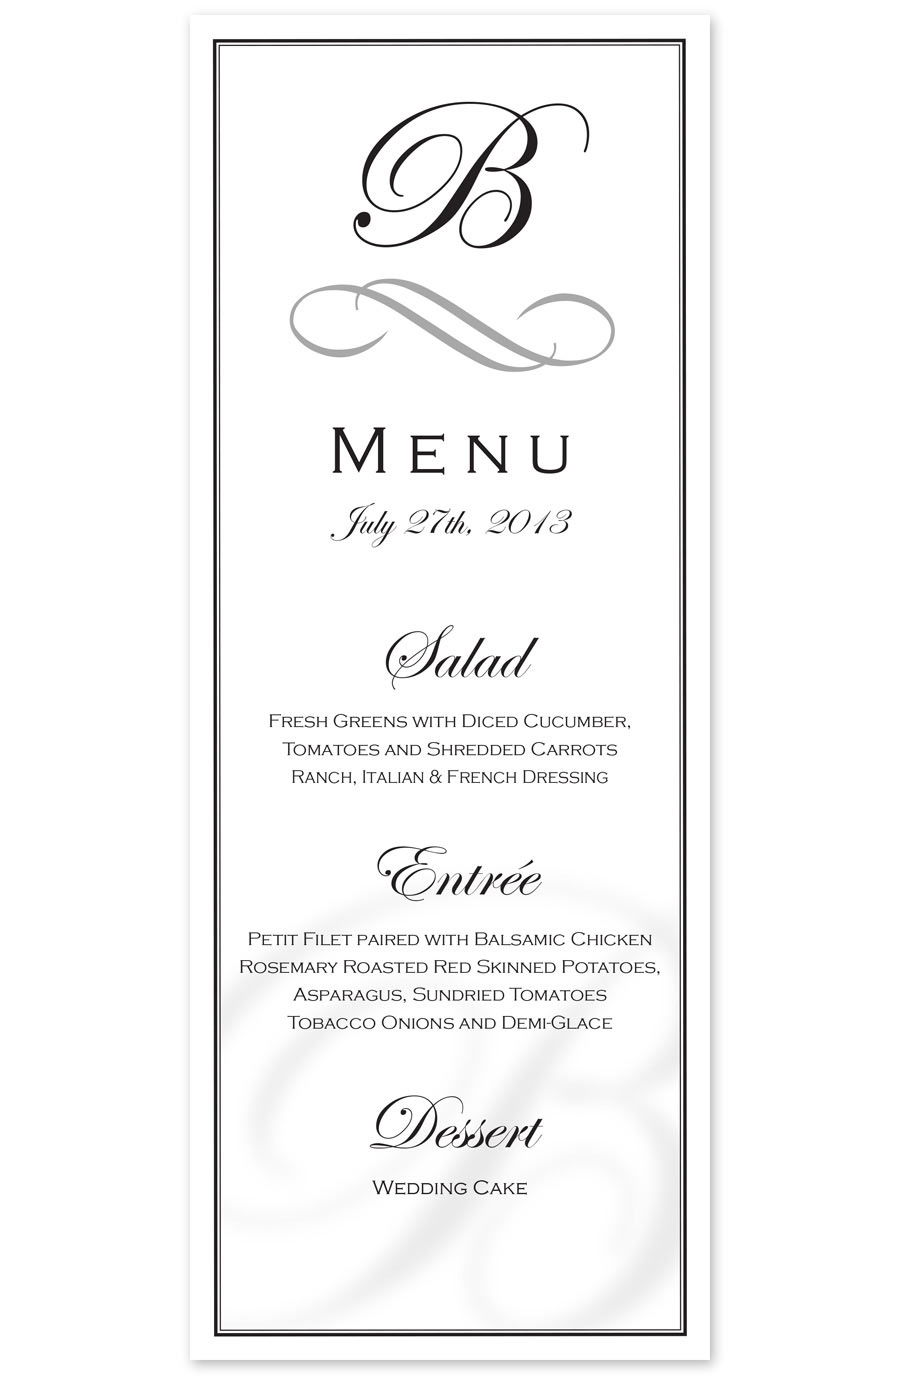 Ryan Sellick Graphic Design Wedding Dinner Menu 2013